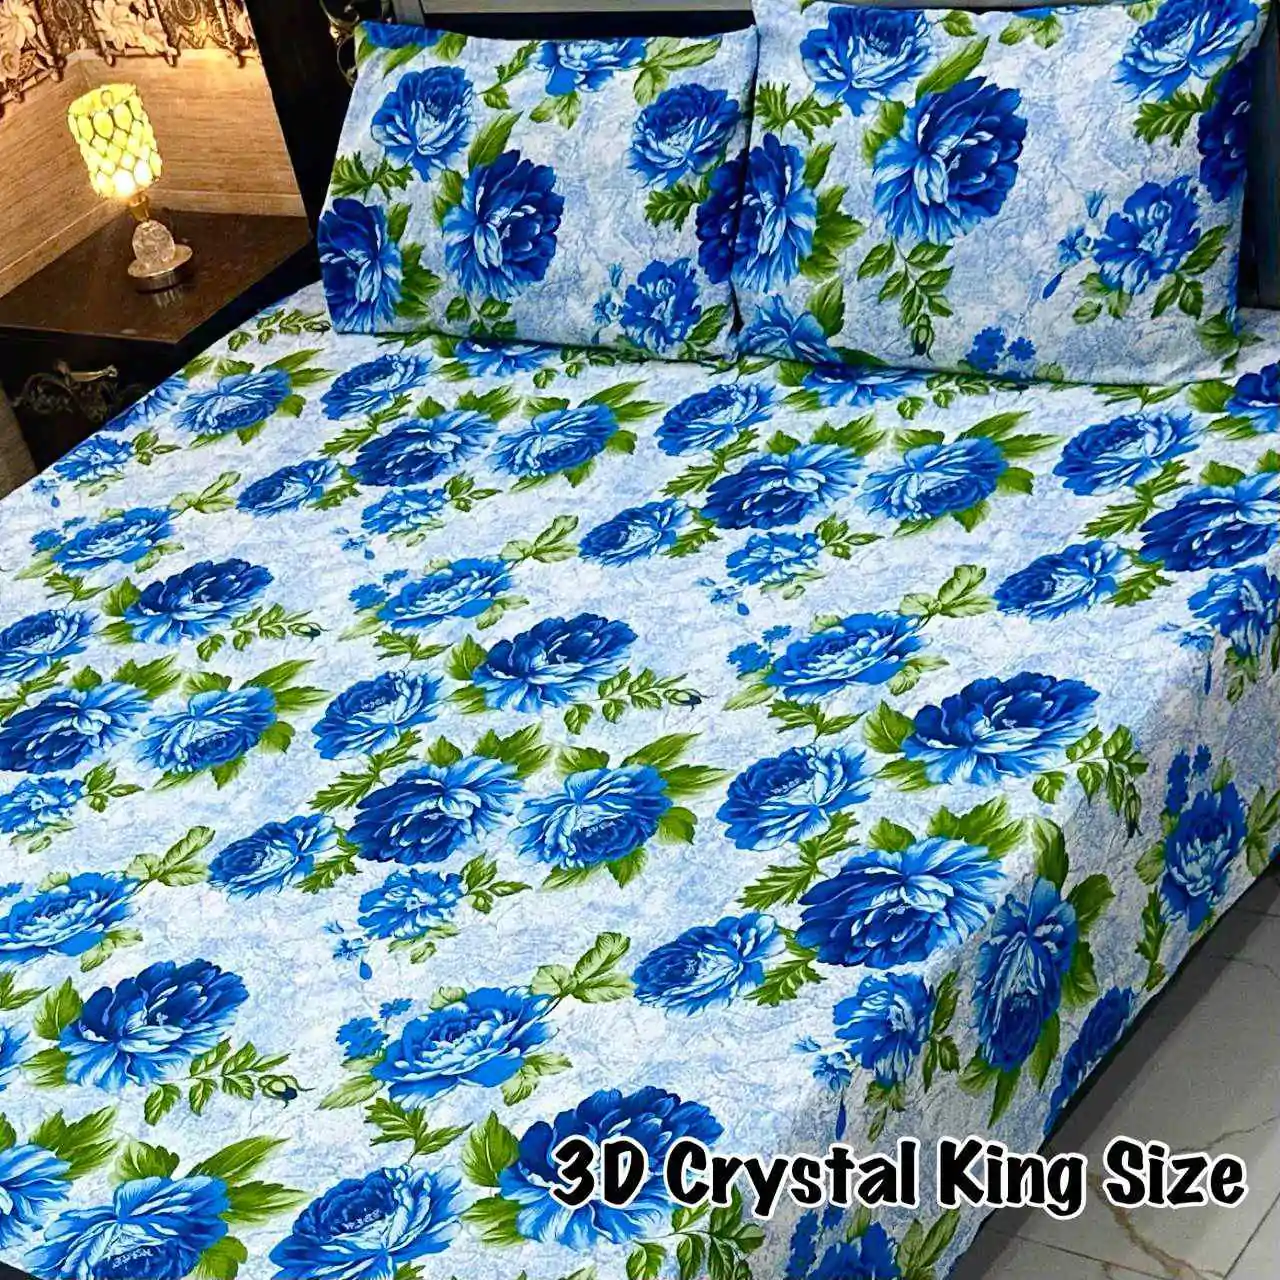 DF-CBSKS-8: DFY Bedding 3D Crystal Bed Sheet King Size